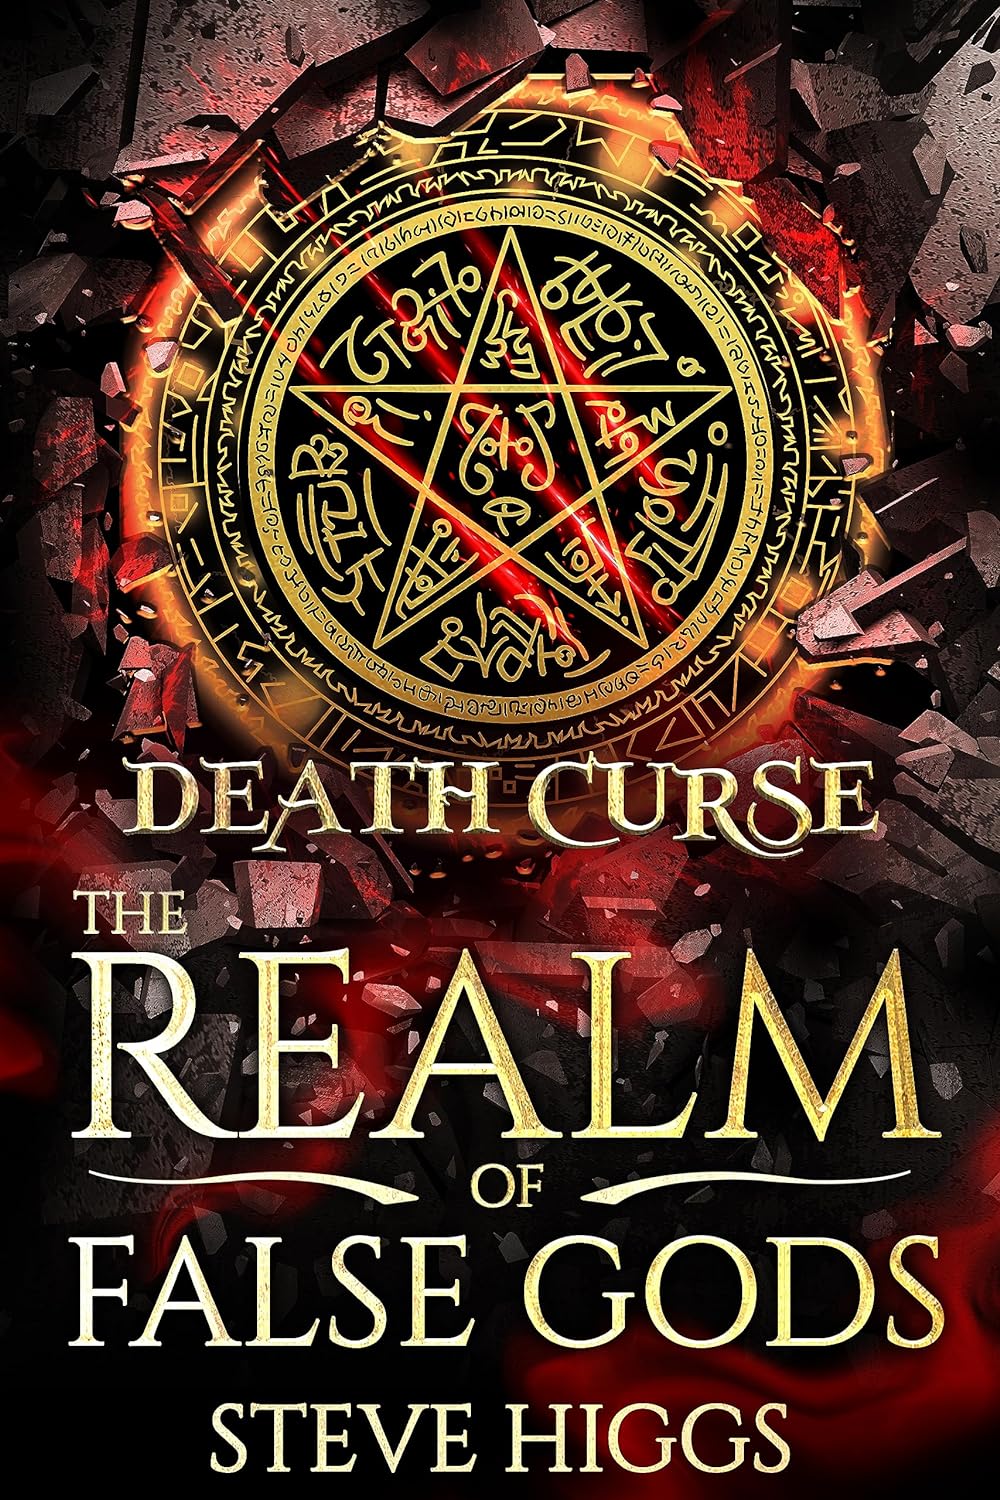 Death Curse: The Final Battle : The Realm of False Gods Book 11